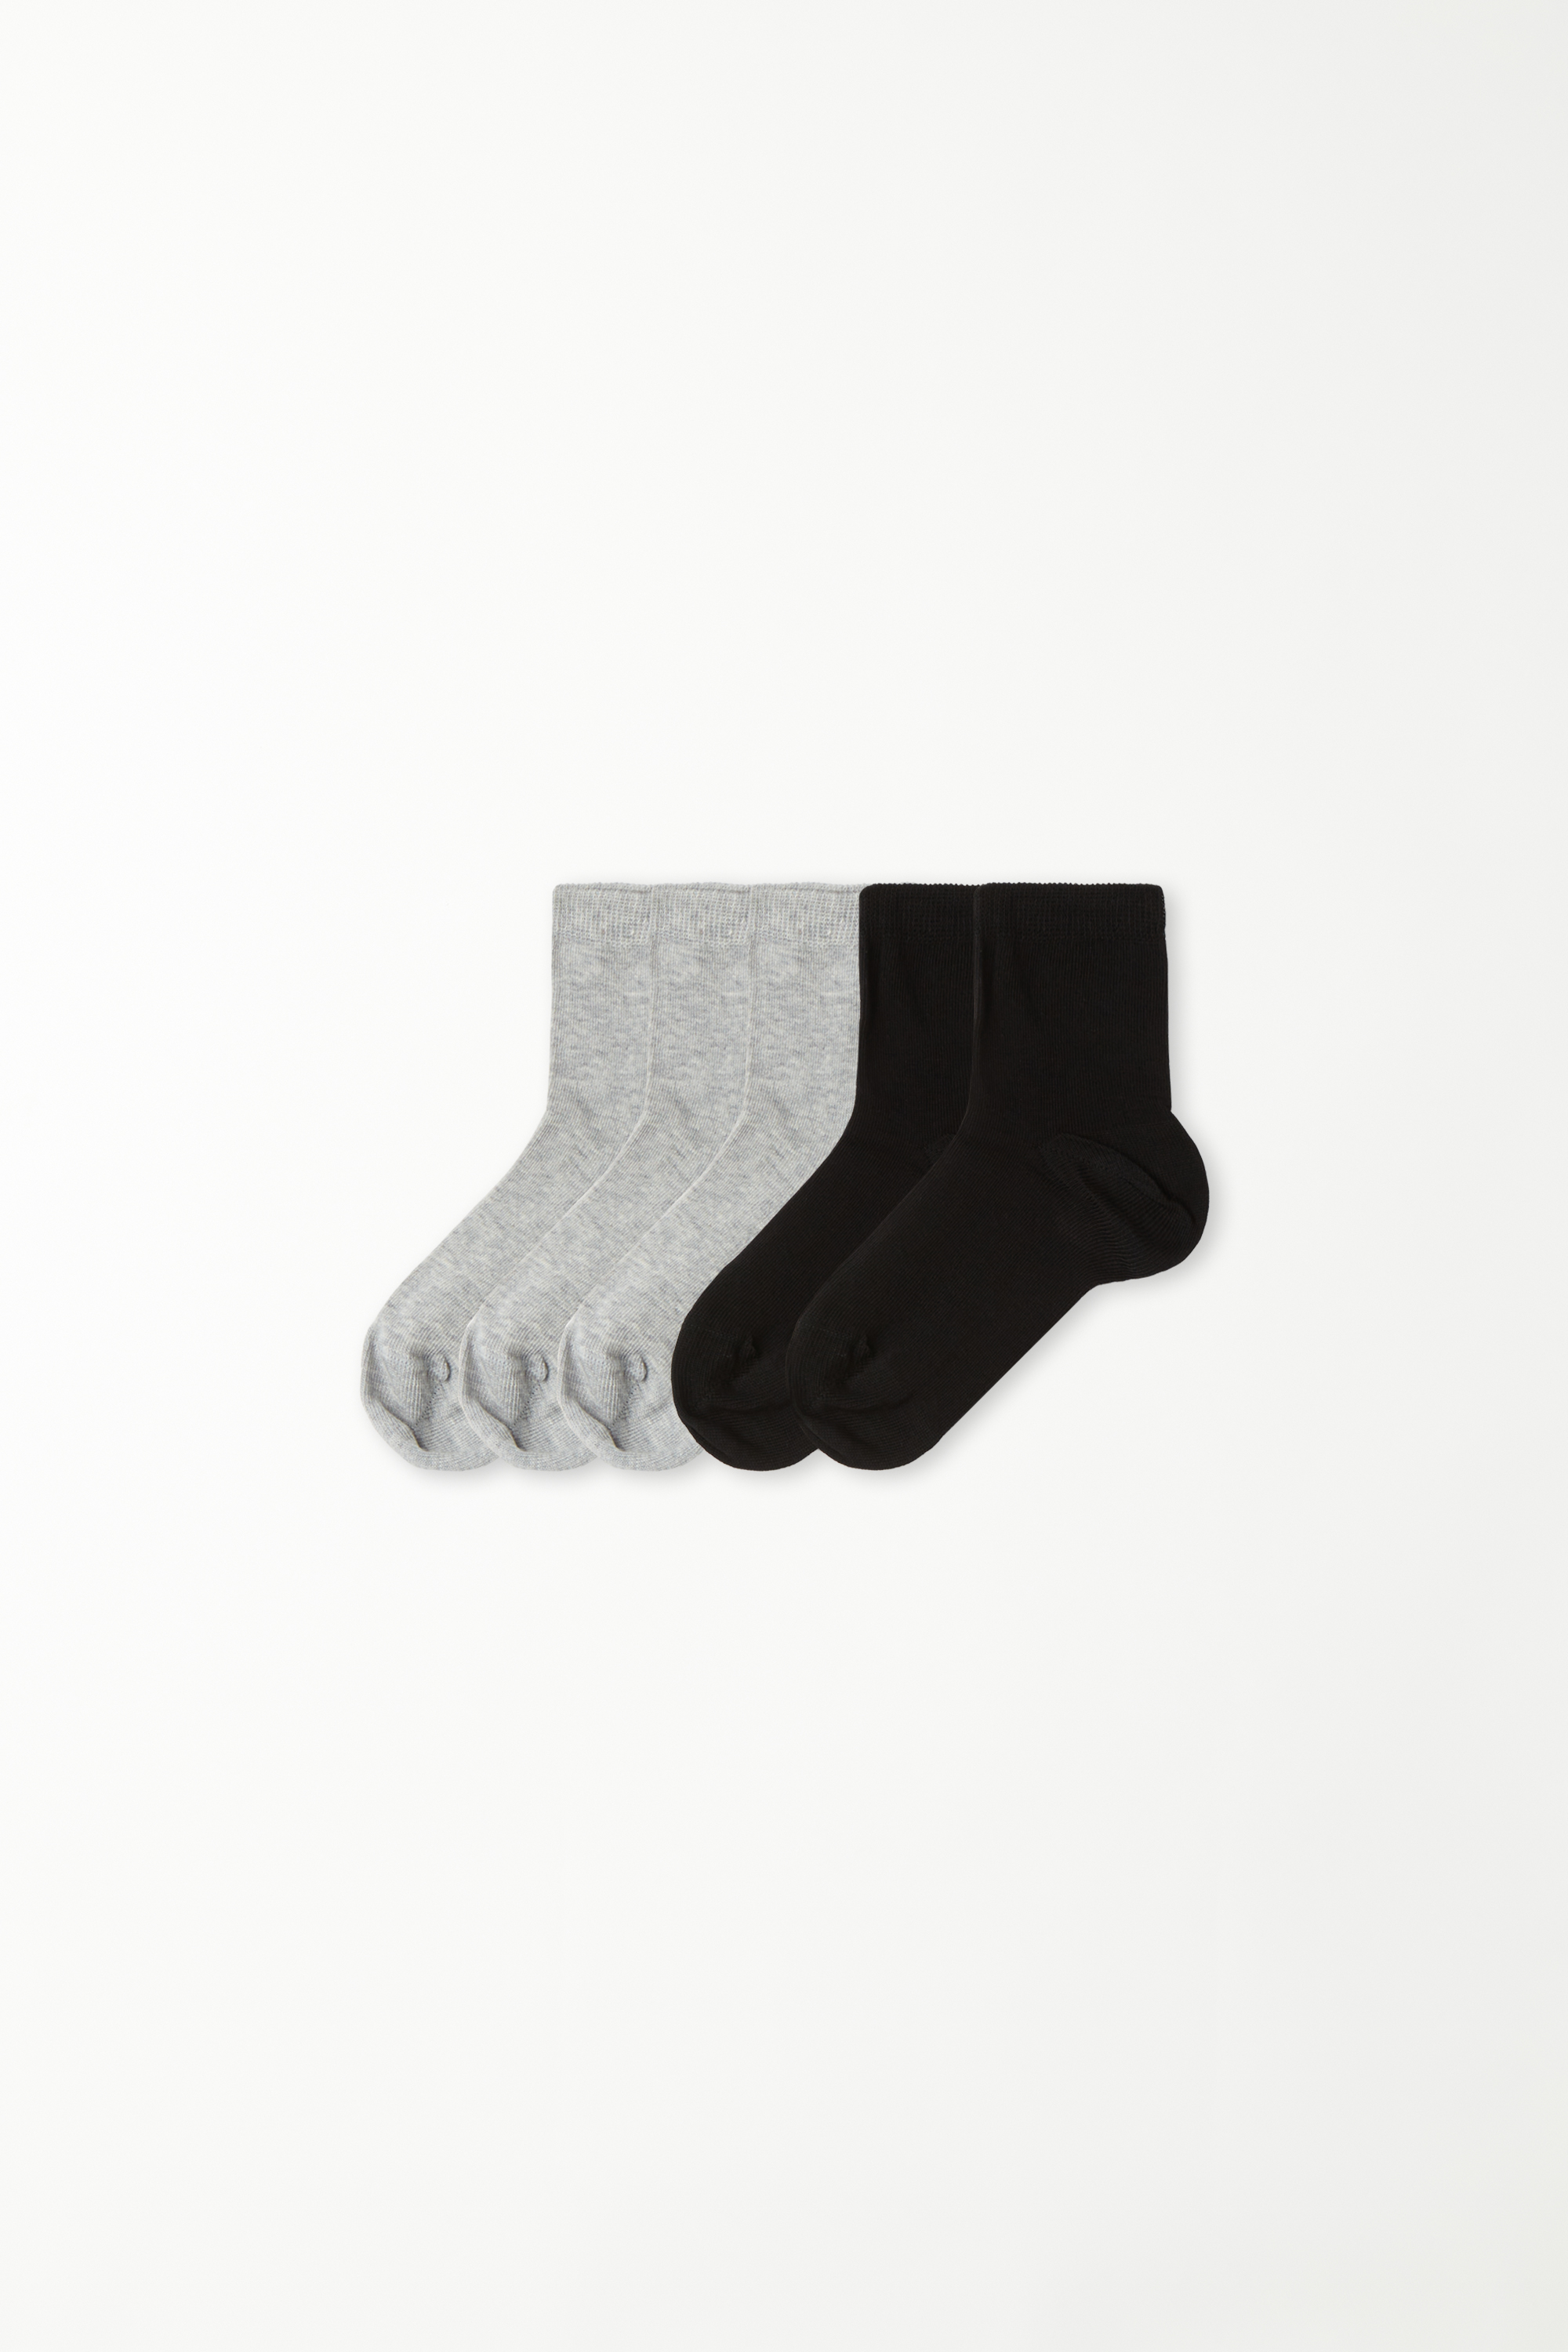 5 Pairs of Kids' Unisex Short Light Cotton Socks